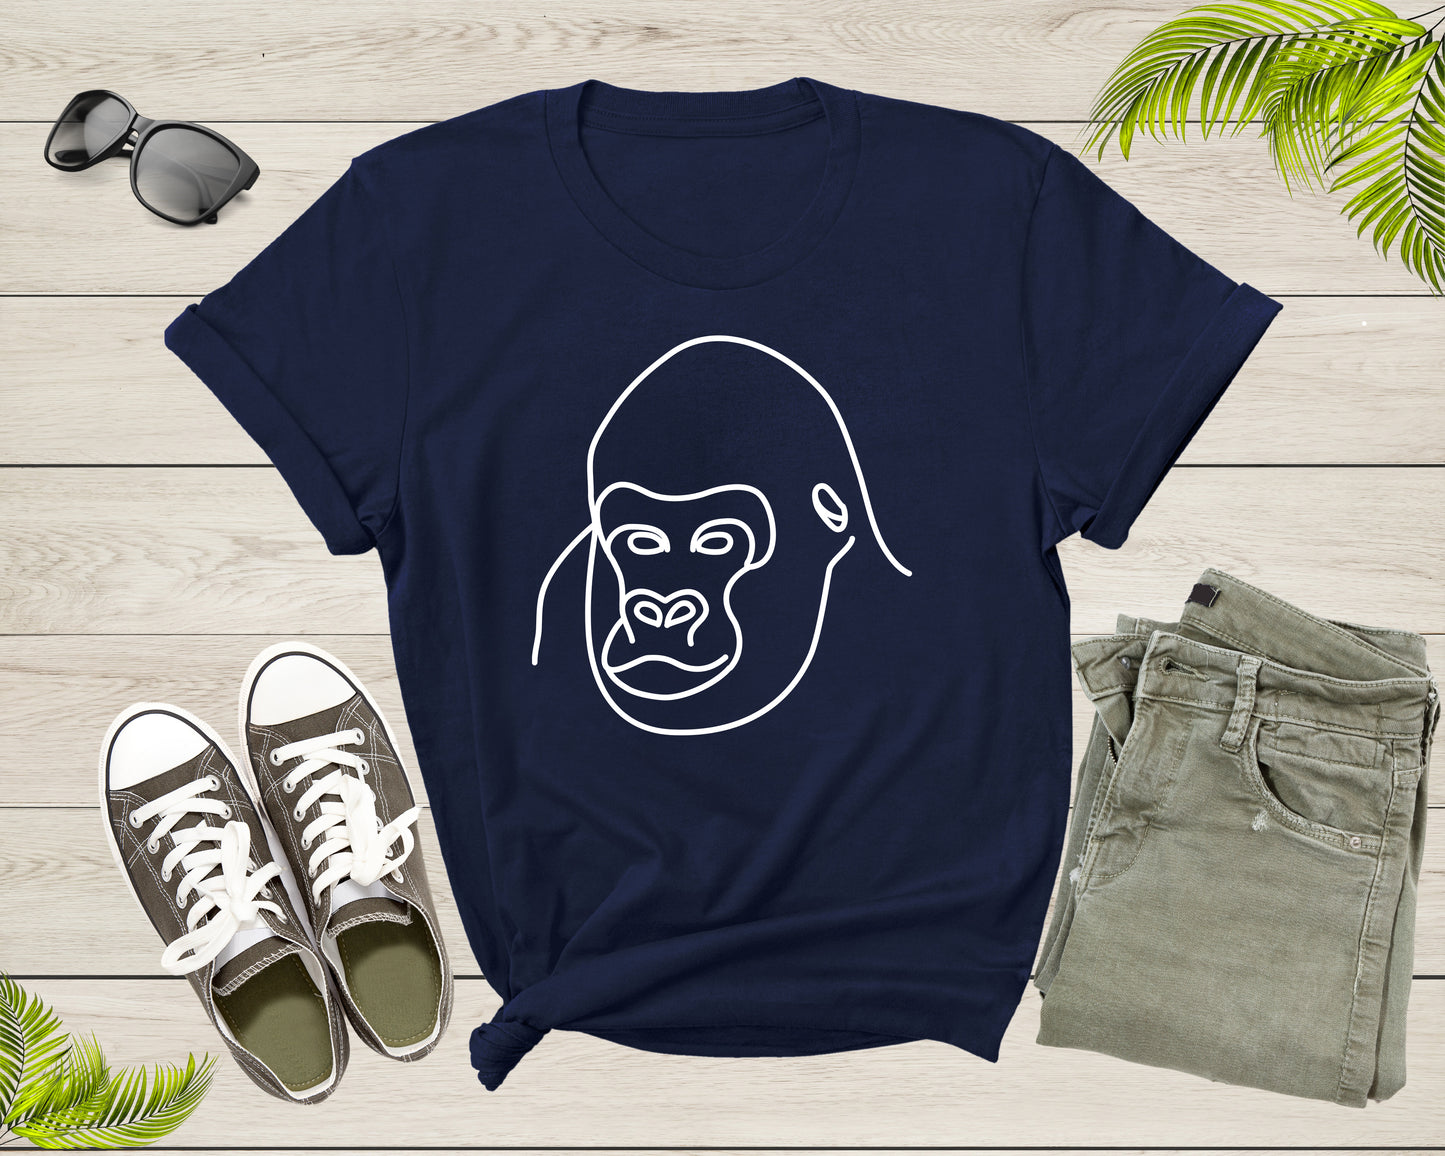 Cool Gorilla Lover Tshirt Design Gift For Adult Men Women Boys Girl Funny Gorilla Animal Graphic Present Shirt Gift Idea Gorilla Gym T-shirt